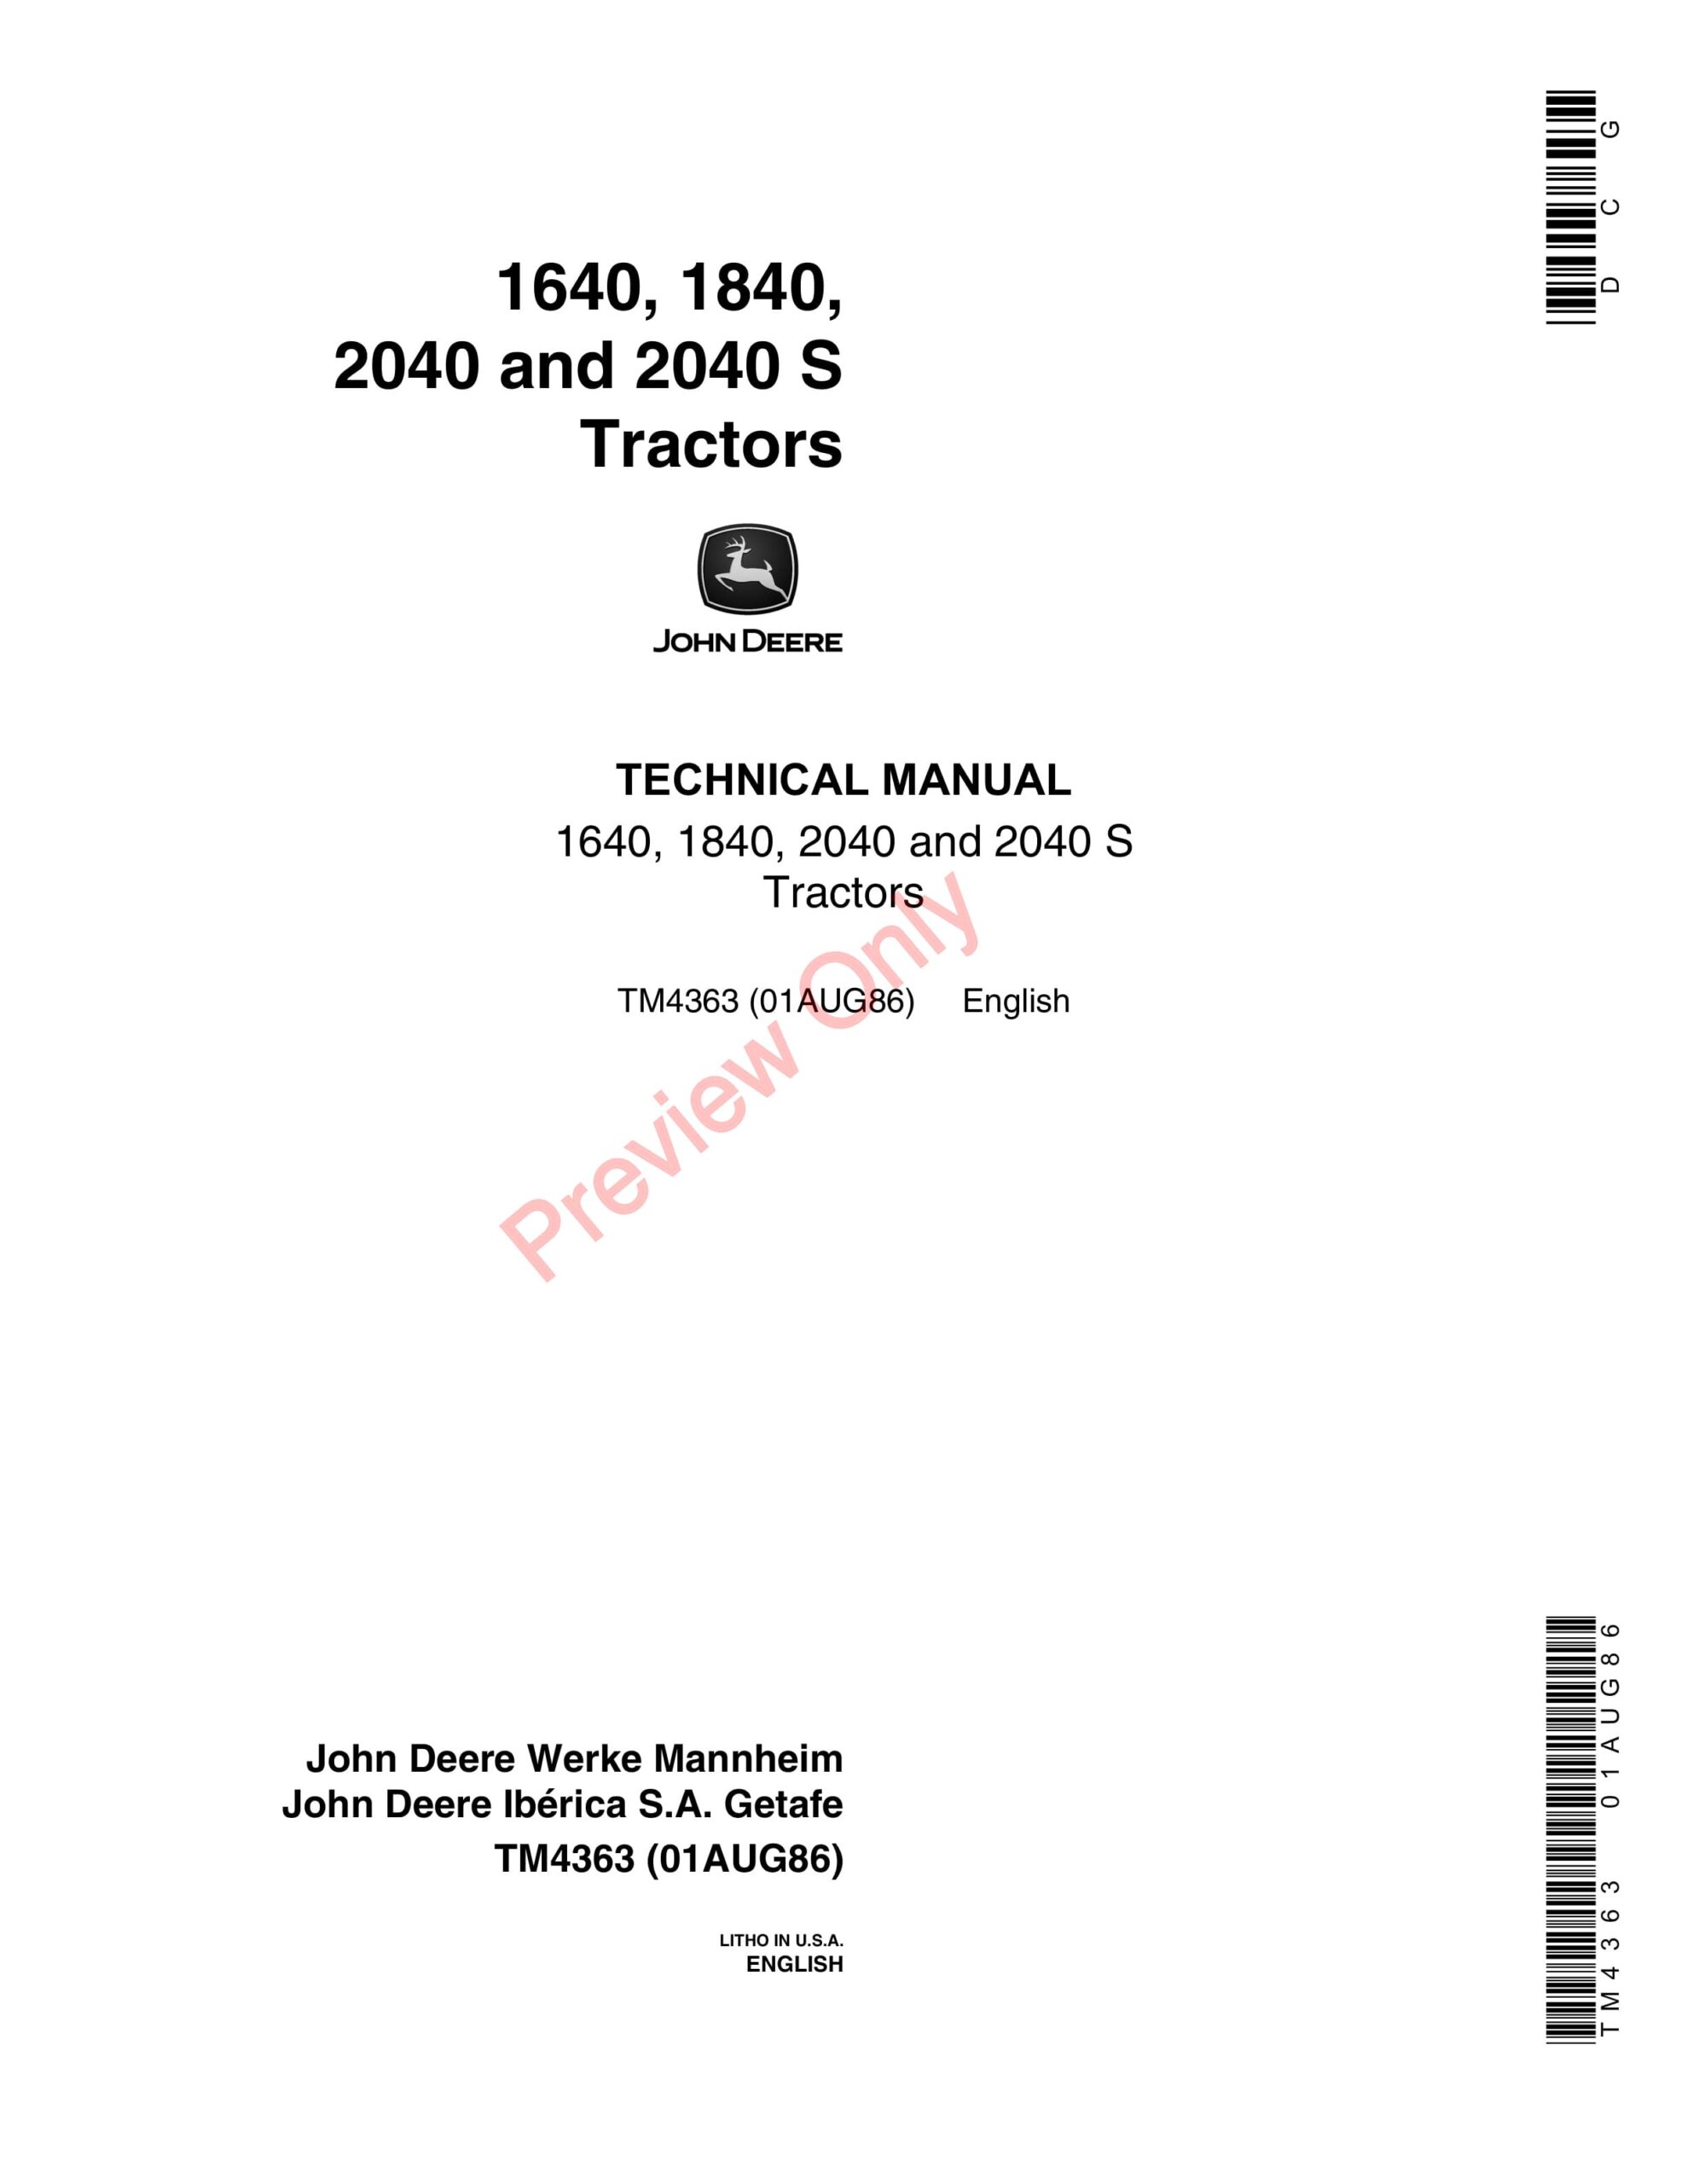 John Deere 1640, 1840, 2040 and 2040S Tractors Technical Manual TM4363 01AUG86-1